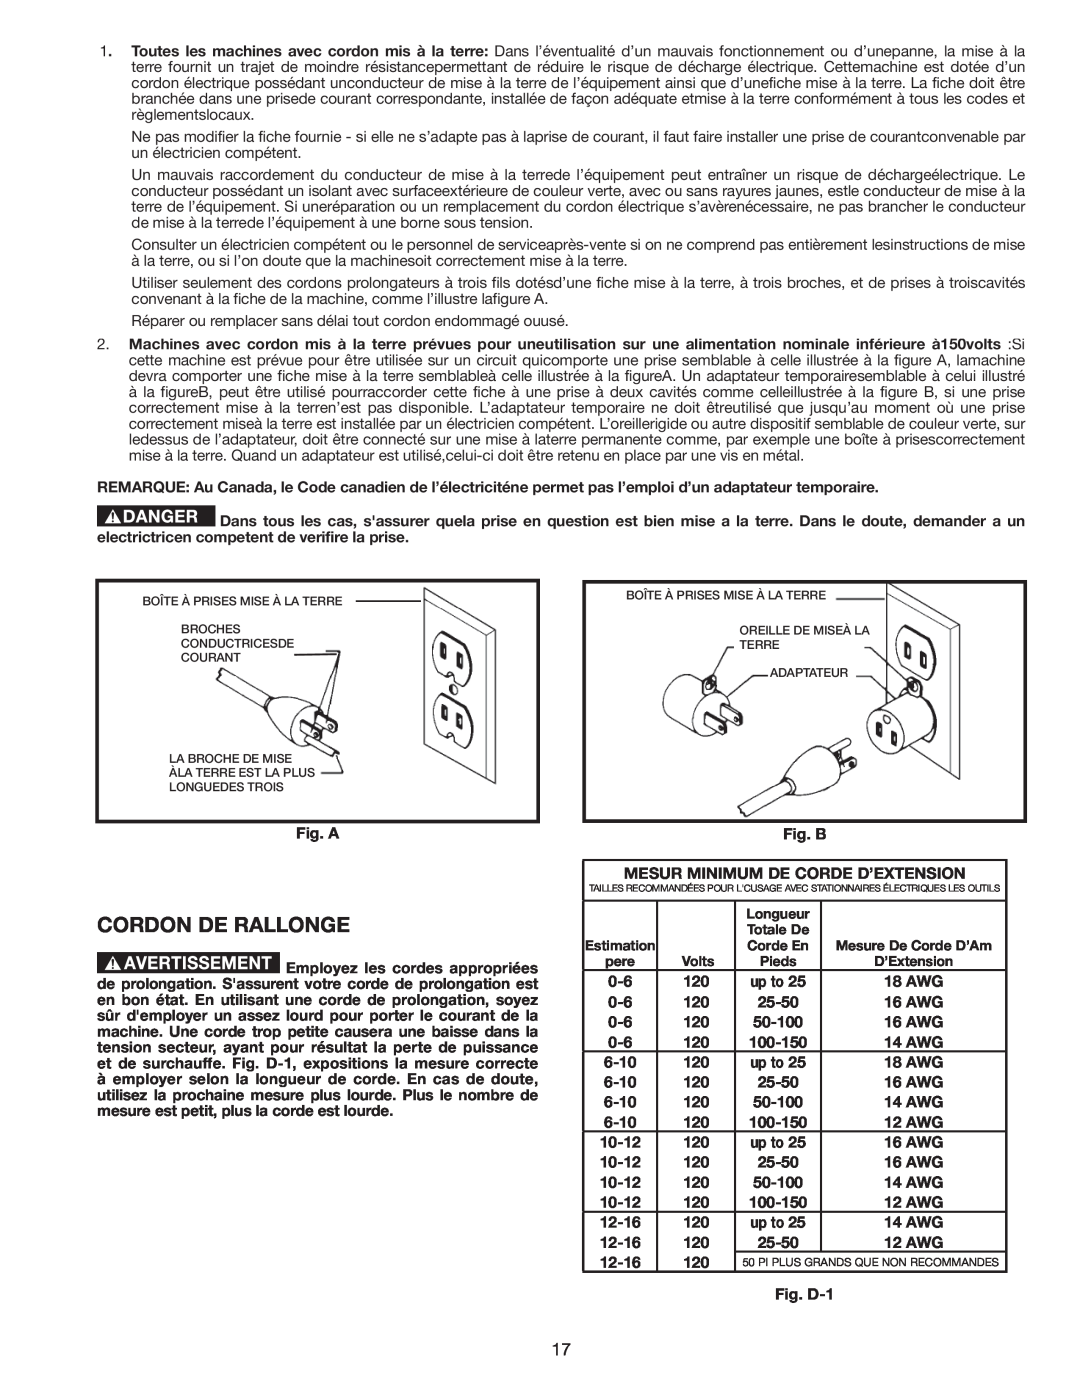 Delta AP-100 instruction manual Cordon De Rallonge 